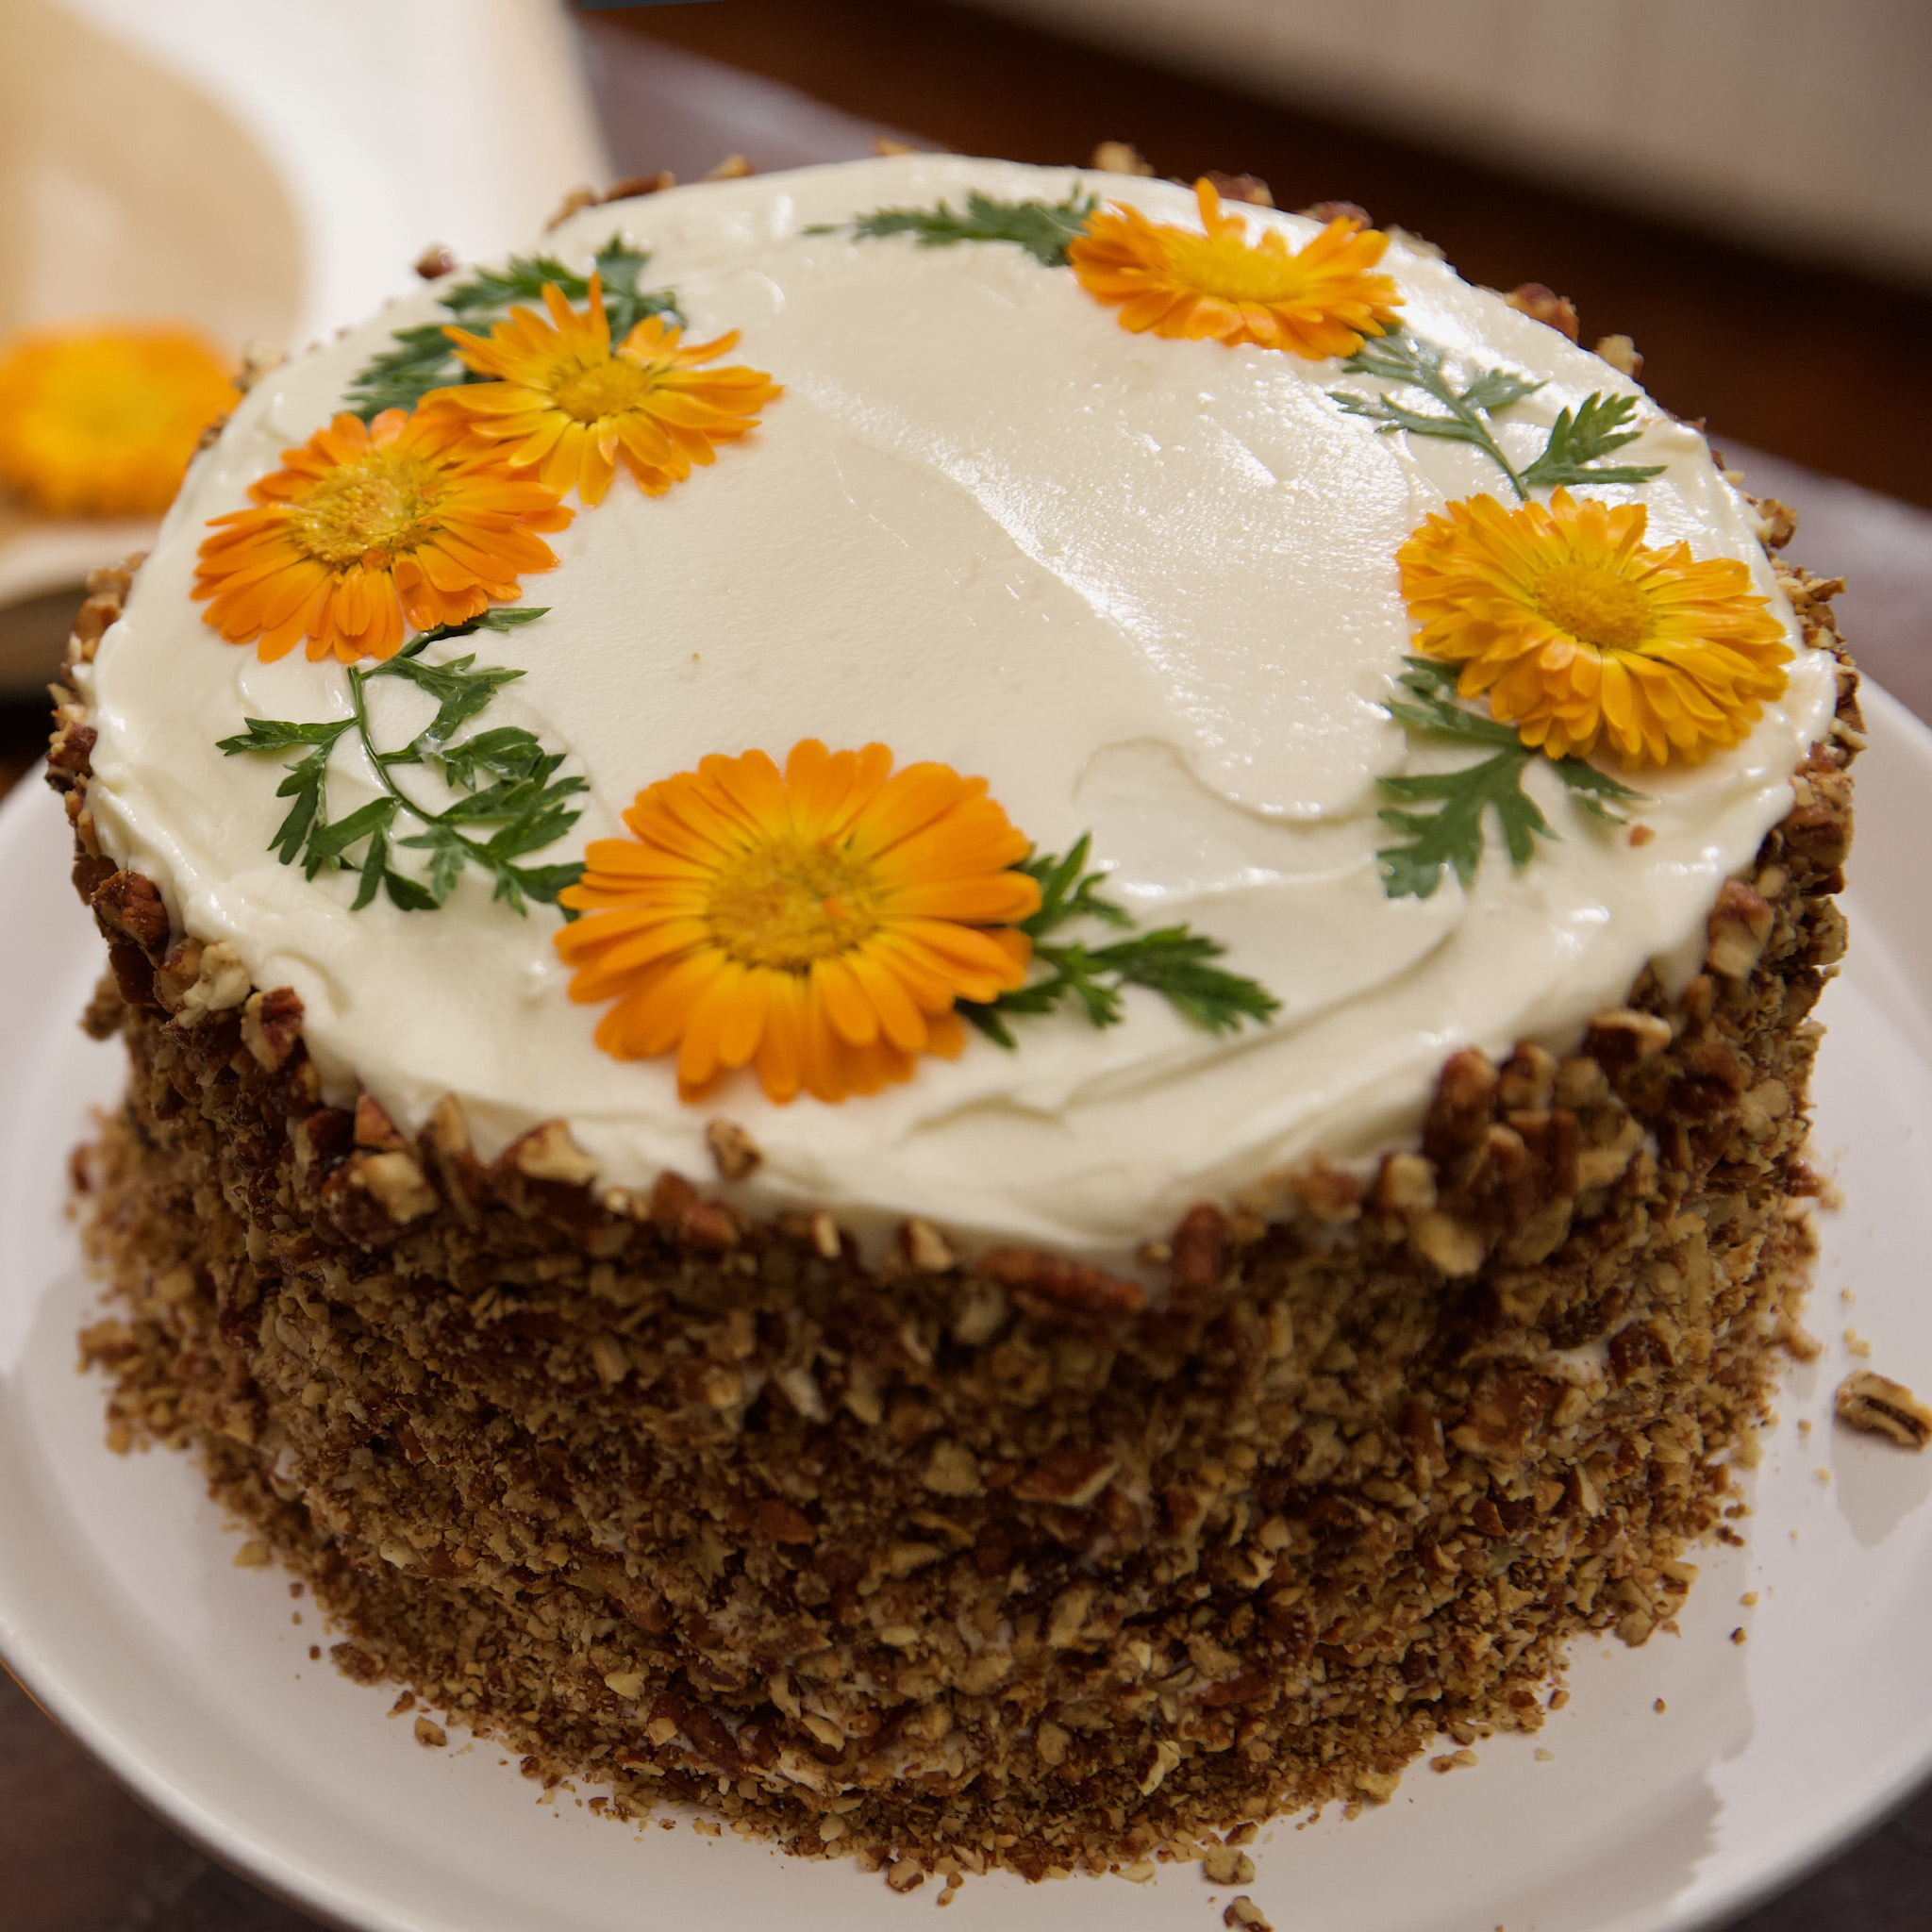 Edible Flower Cake Kits : Bake Believe